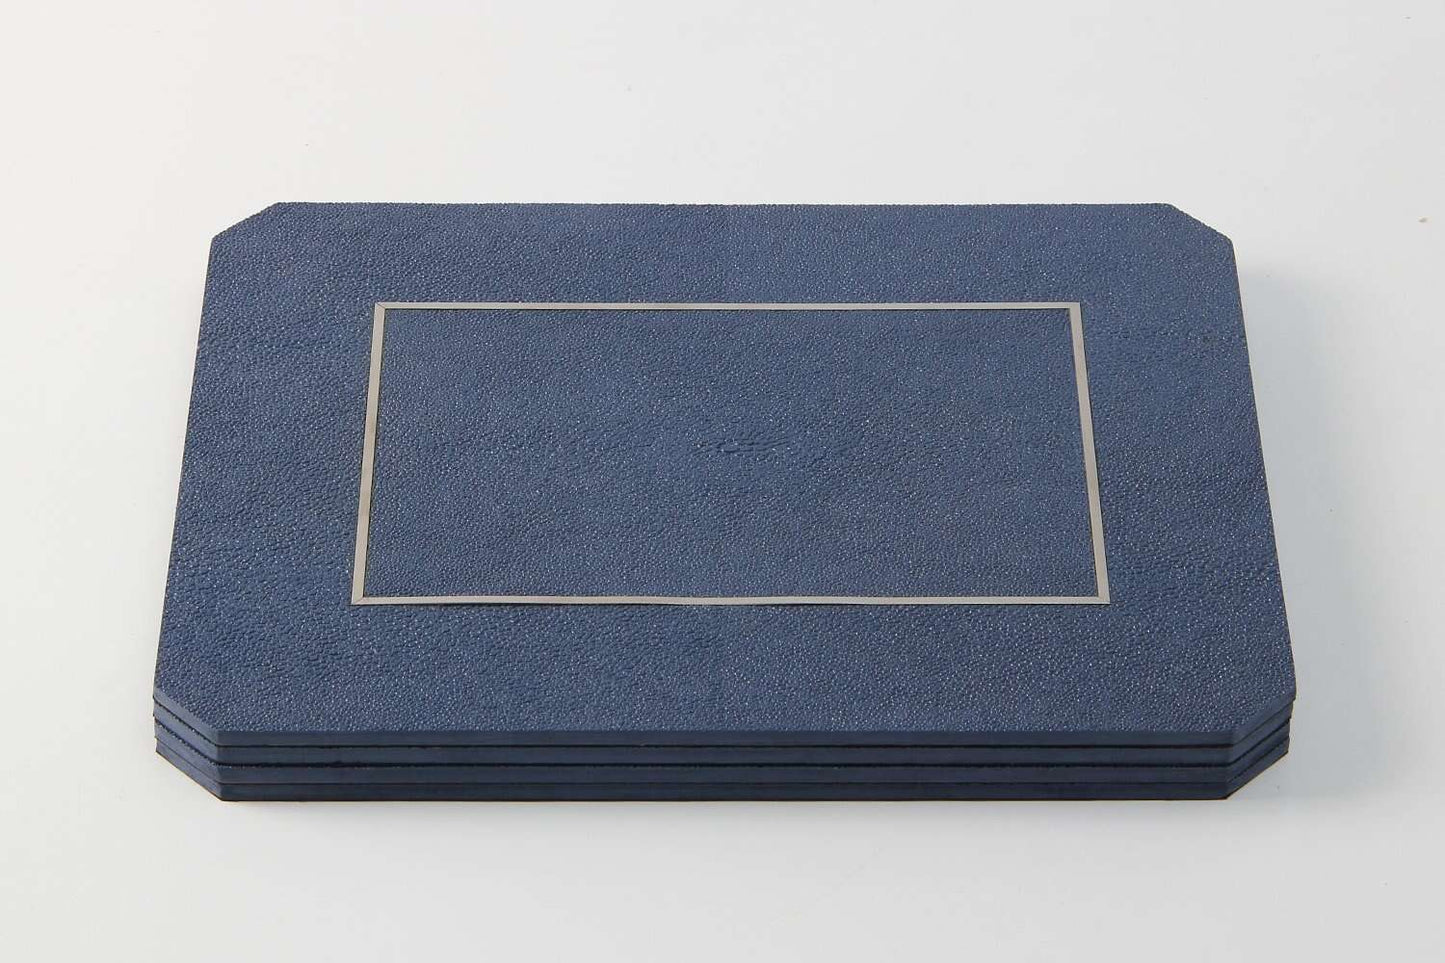 Nile Blue Shagreen Place mats